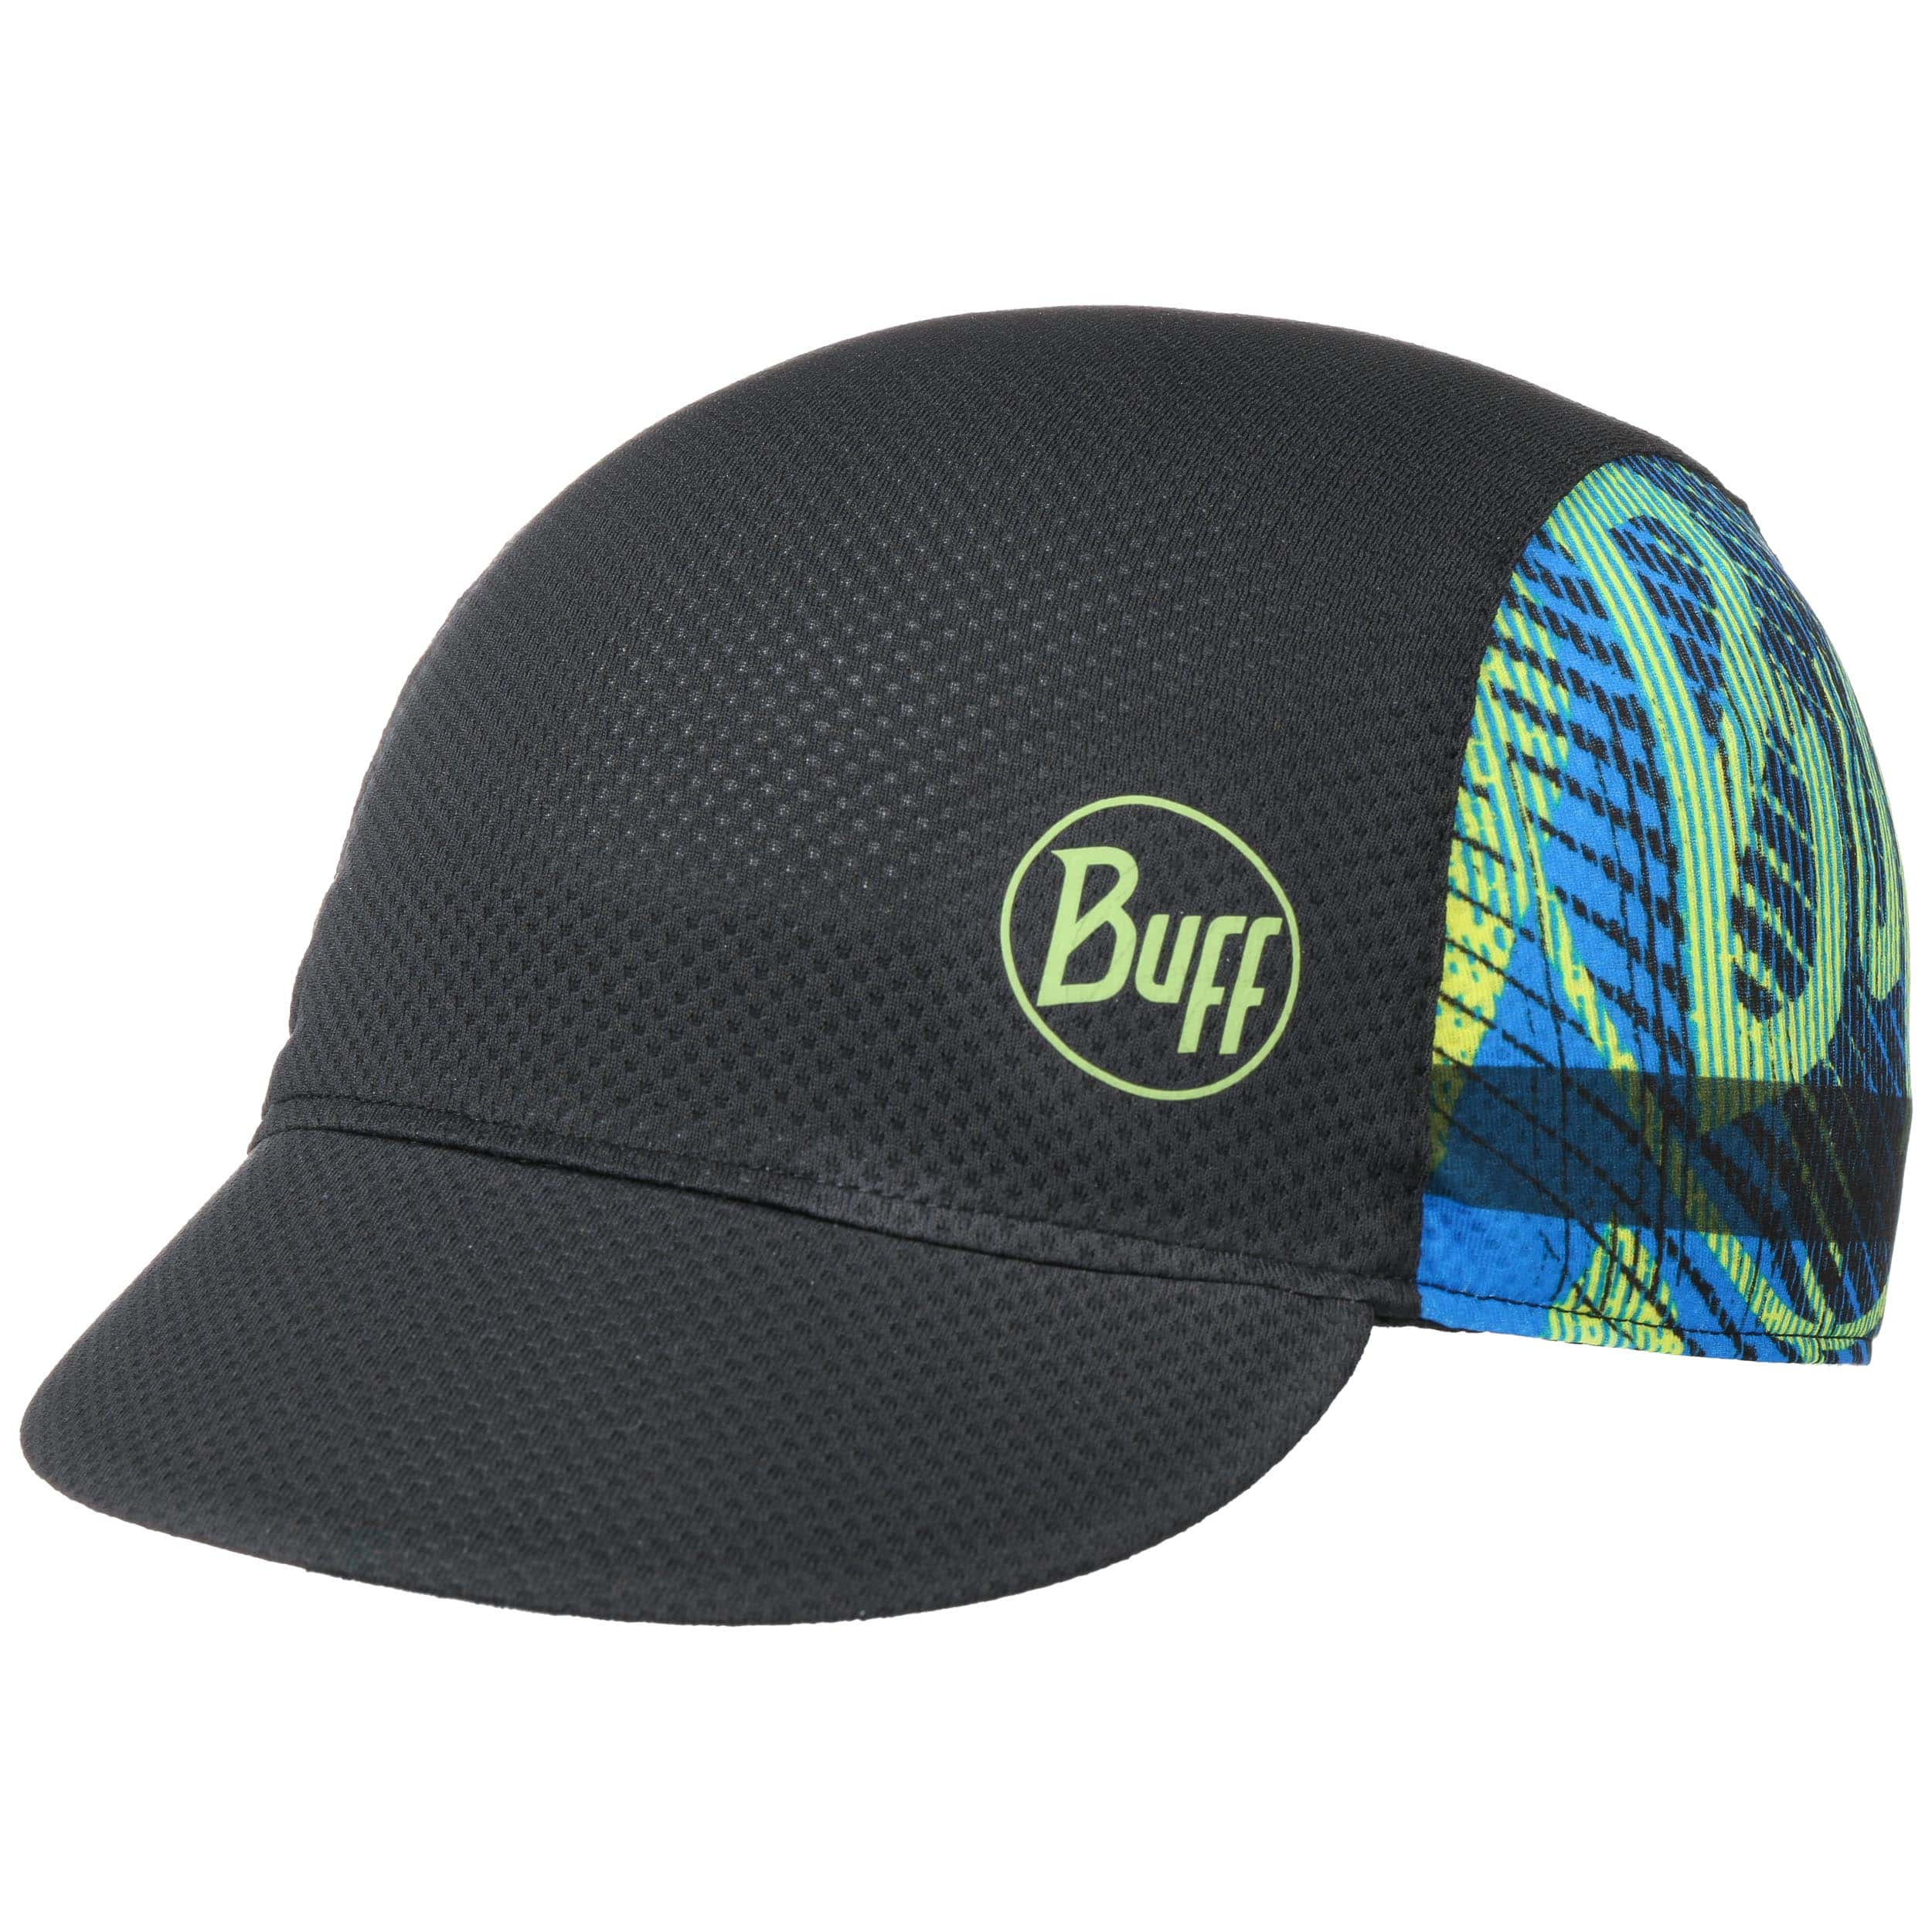 buff bike cap